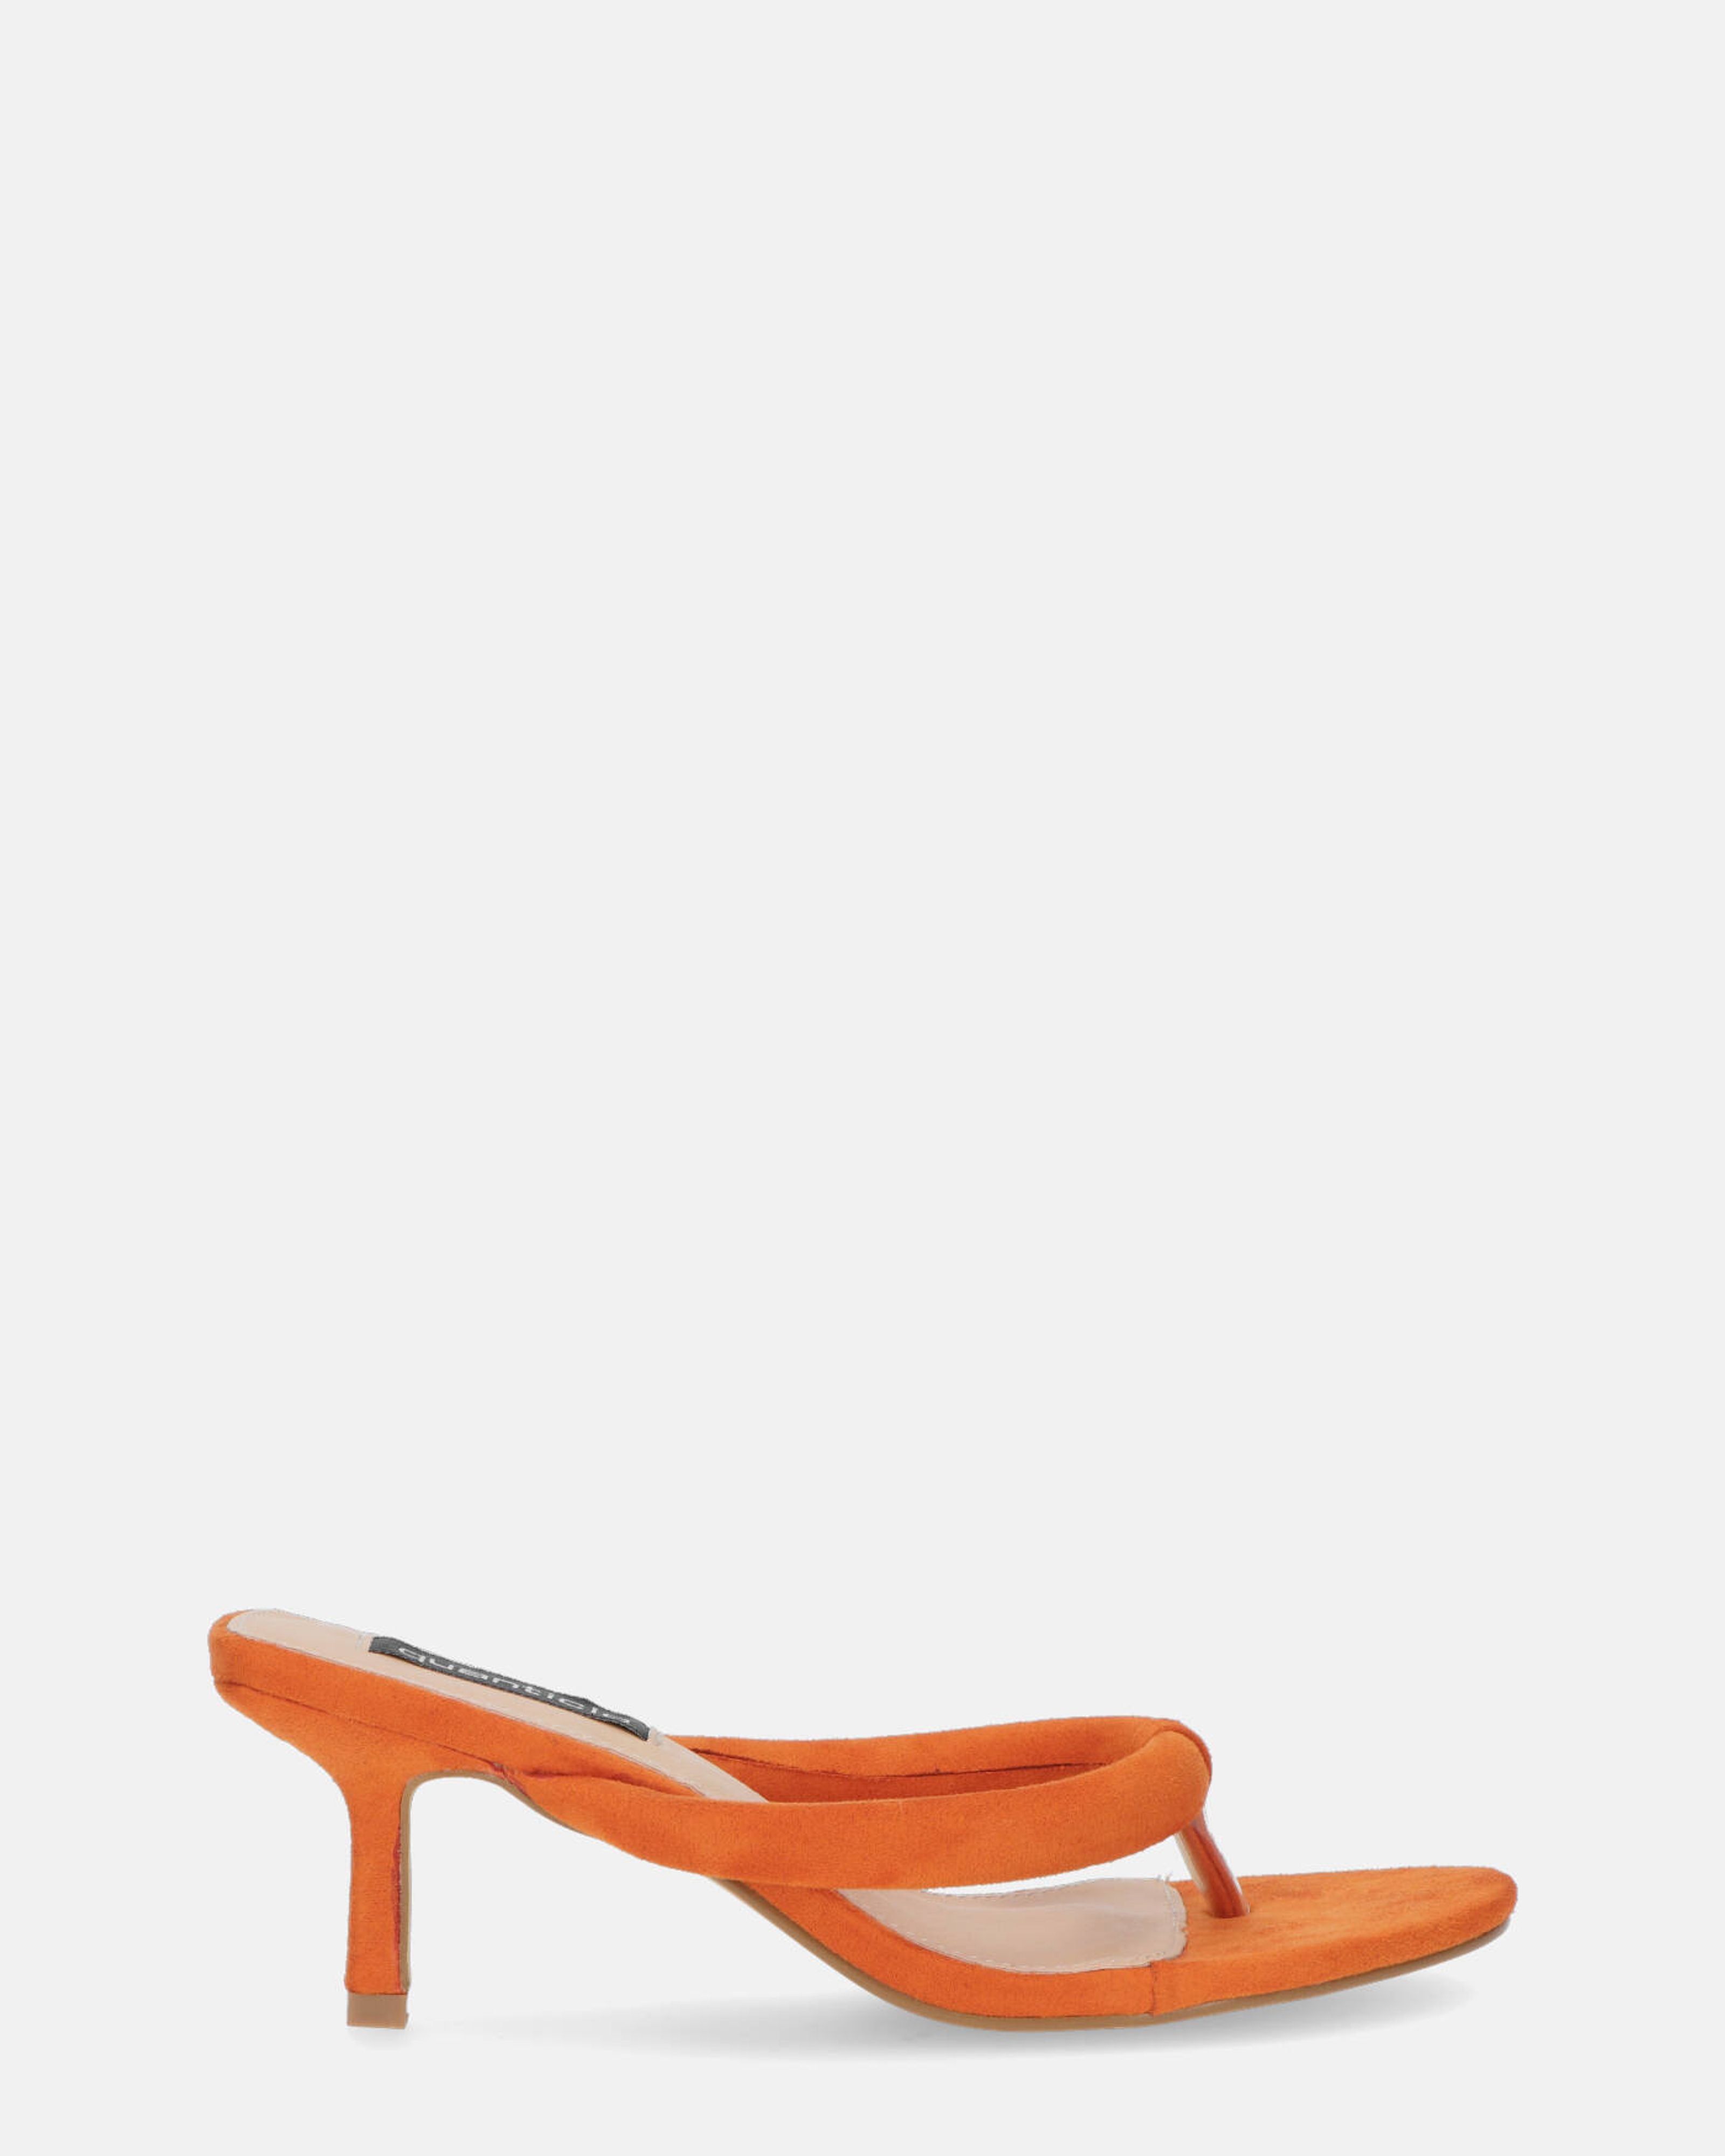 WENDI - sandalo con tacco in camoscio arancio